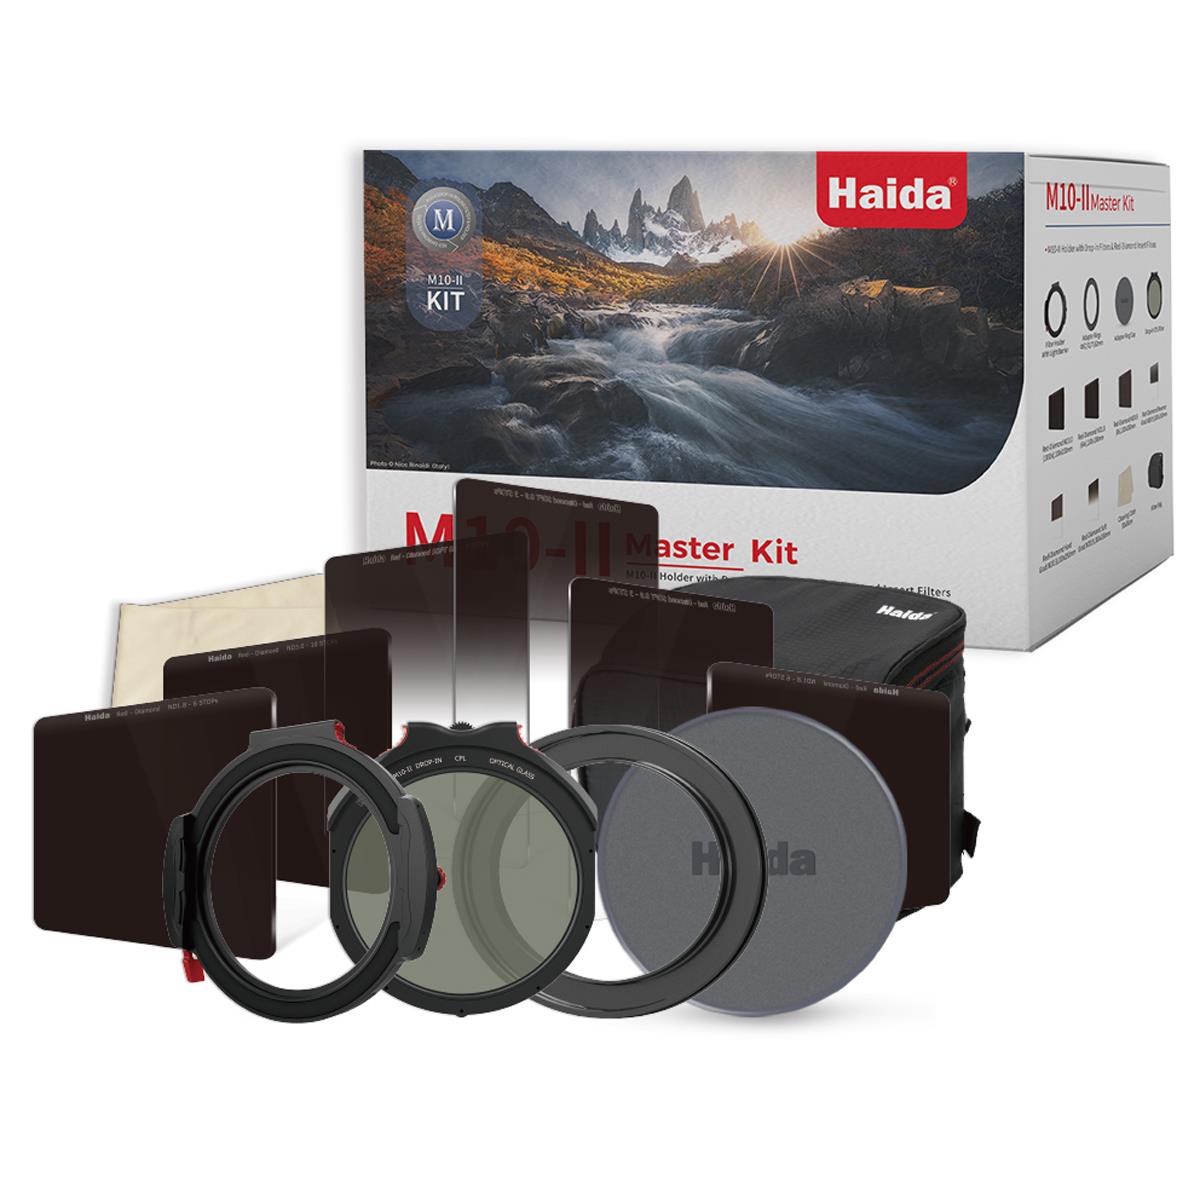 Image of Haida M10-II Master Filter Kit